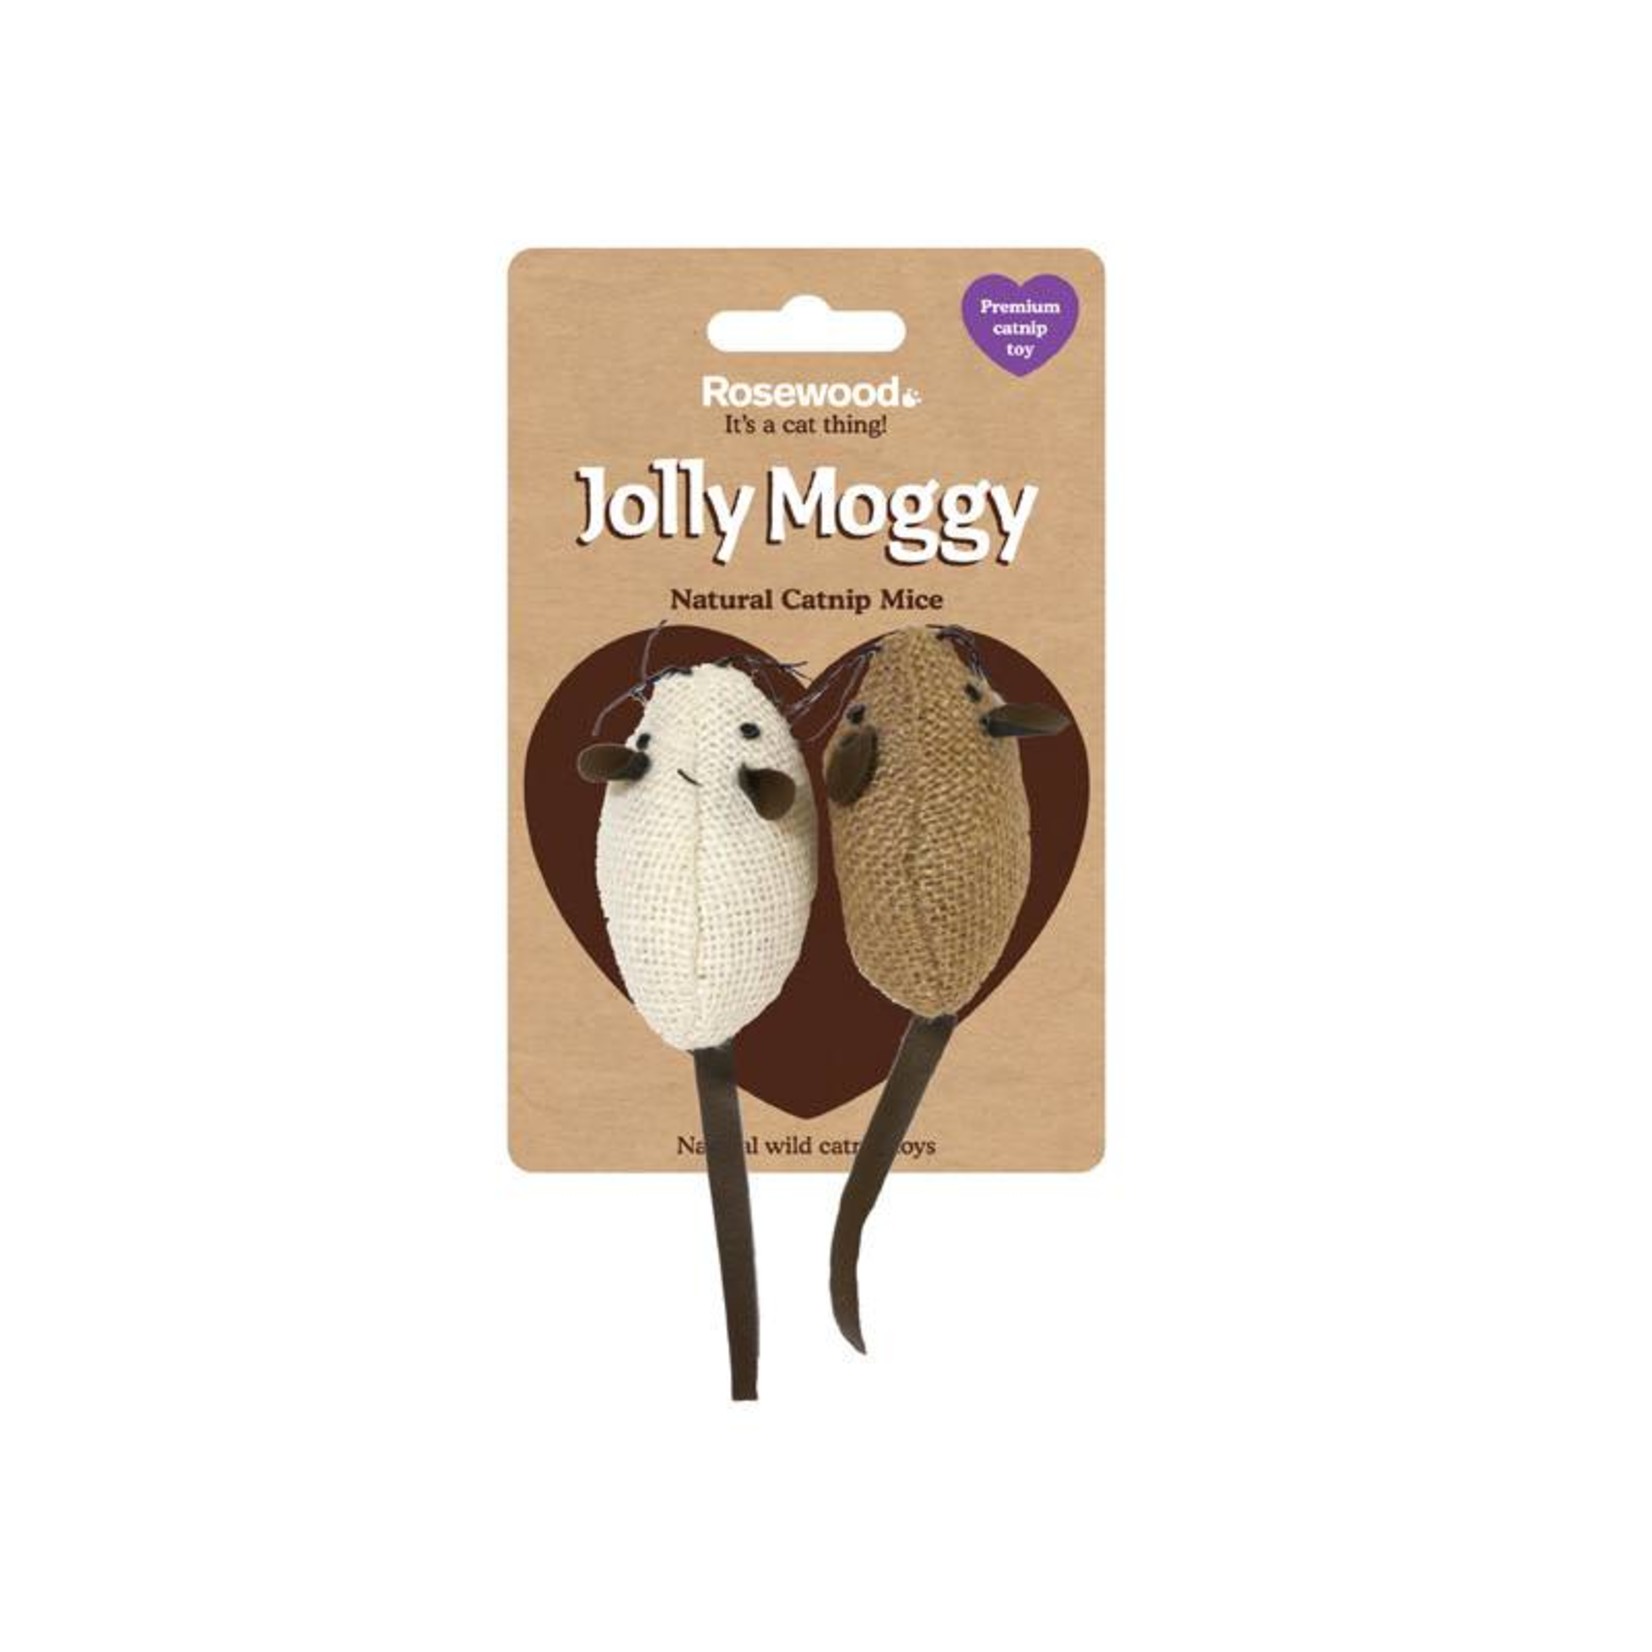 Rosewood Jolly Moggy Wild Catnip Cat Toys Mice